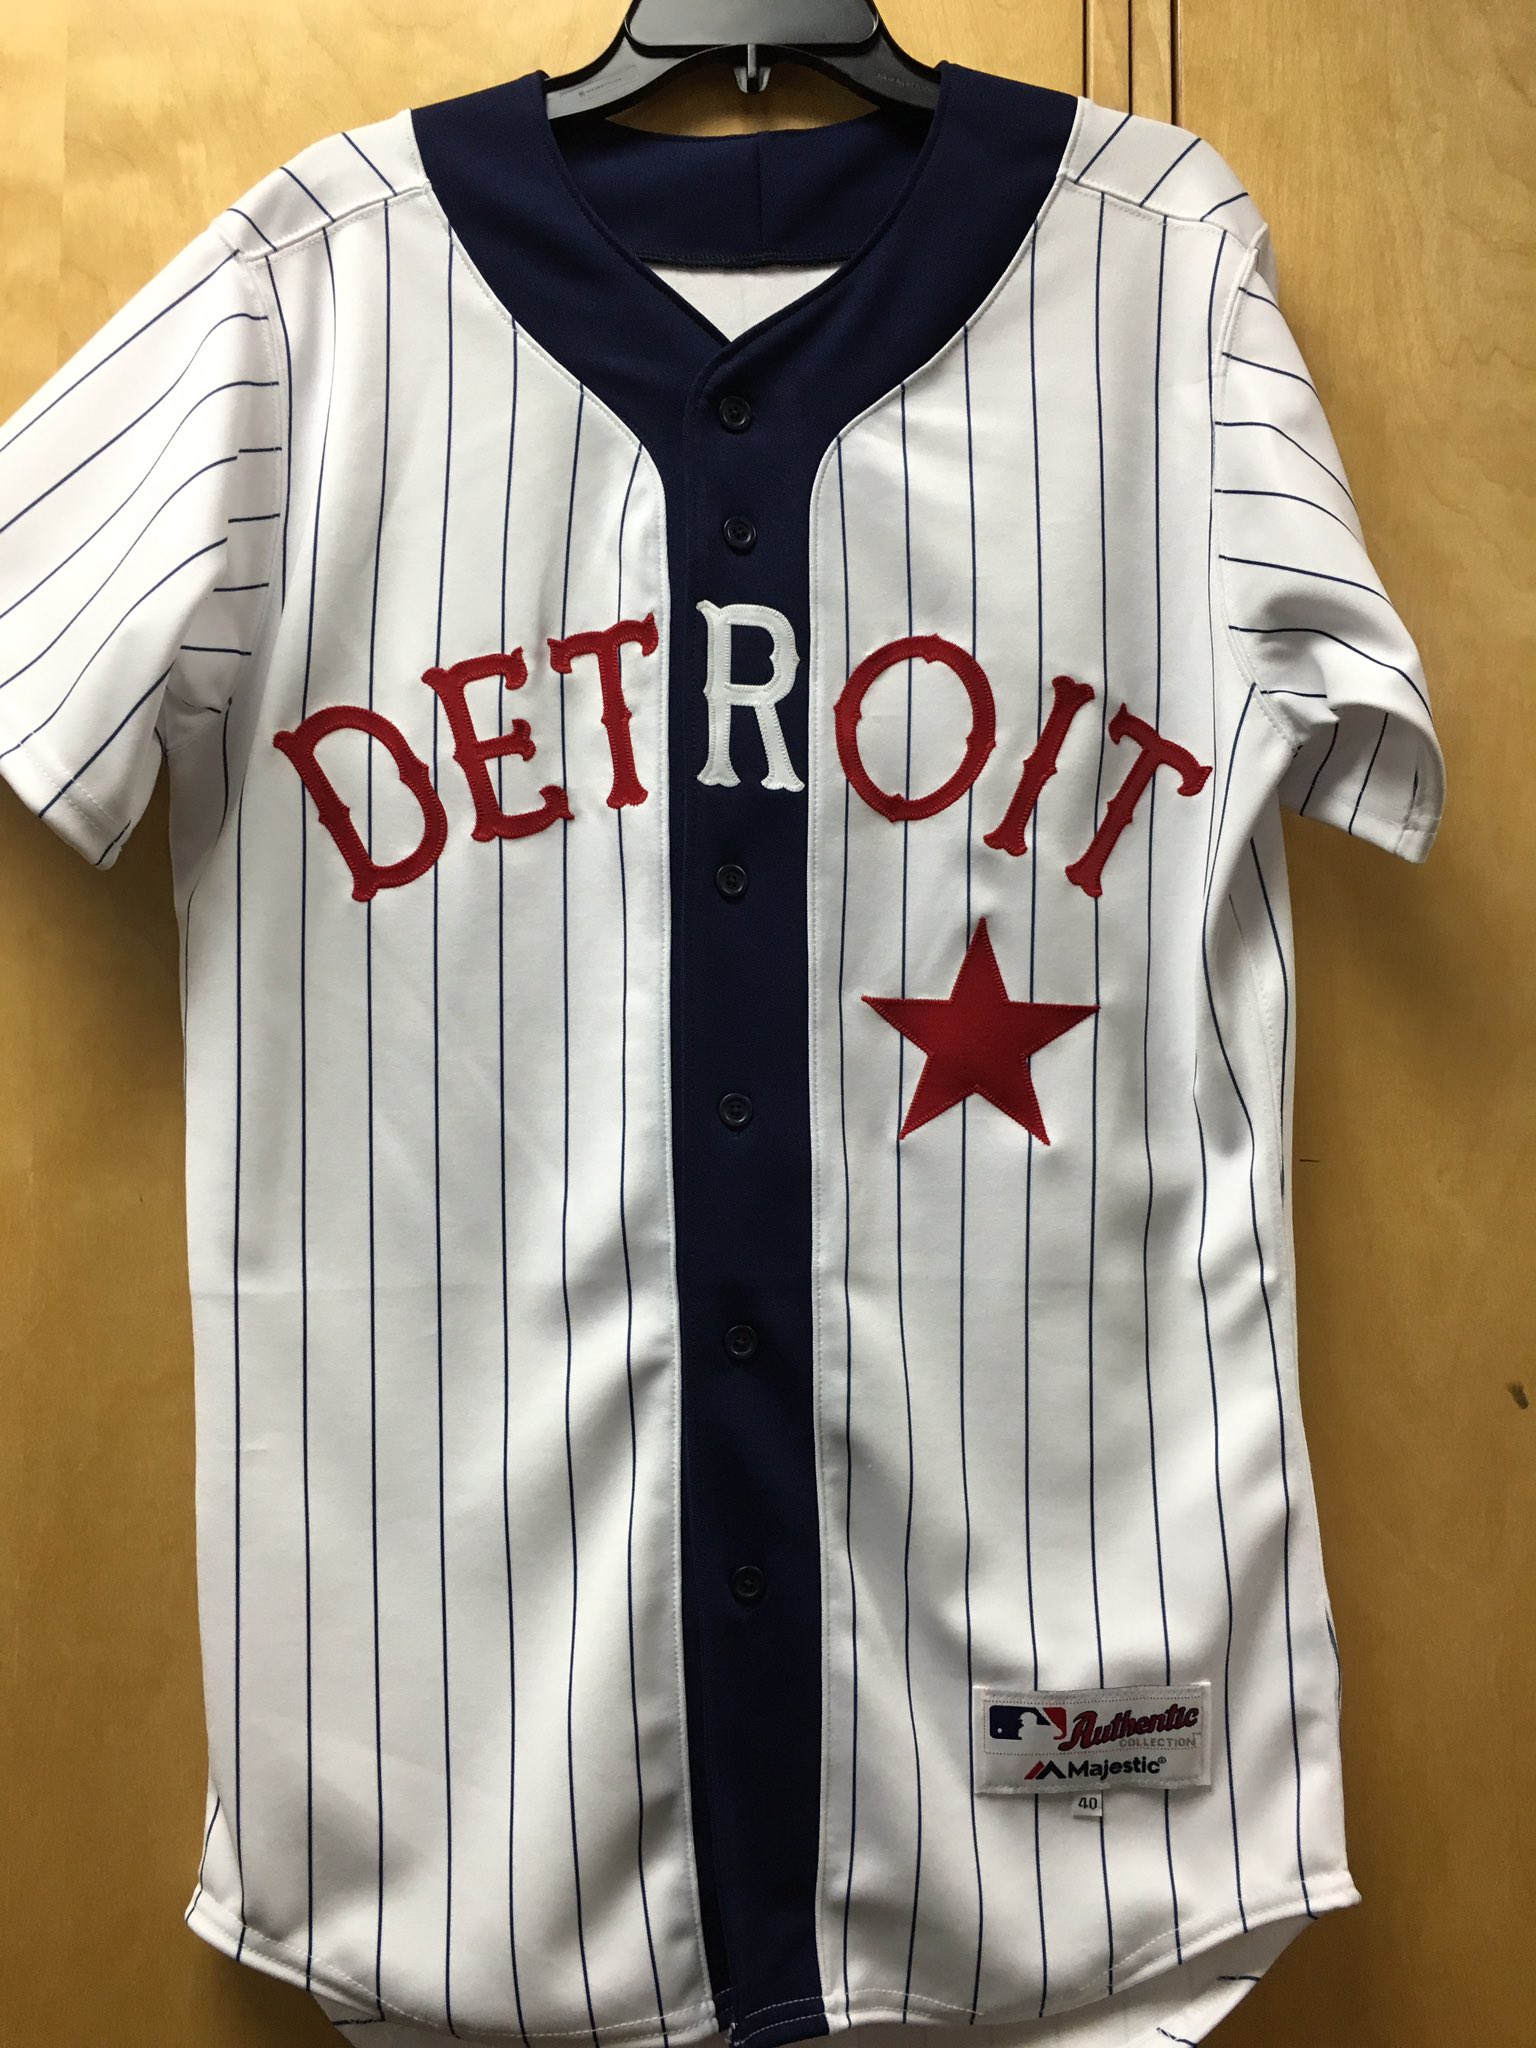 Photos: Detroit Tigers uniforms through the years